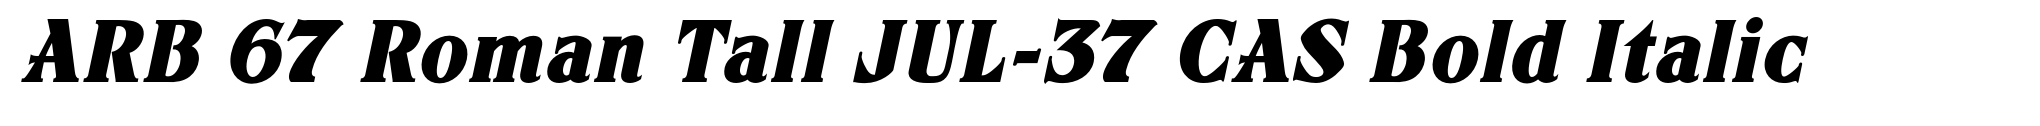 ARB 67 Roman Tall JUL-37 CAS Bold Italic image